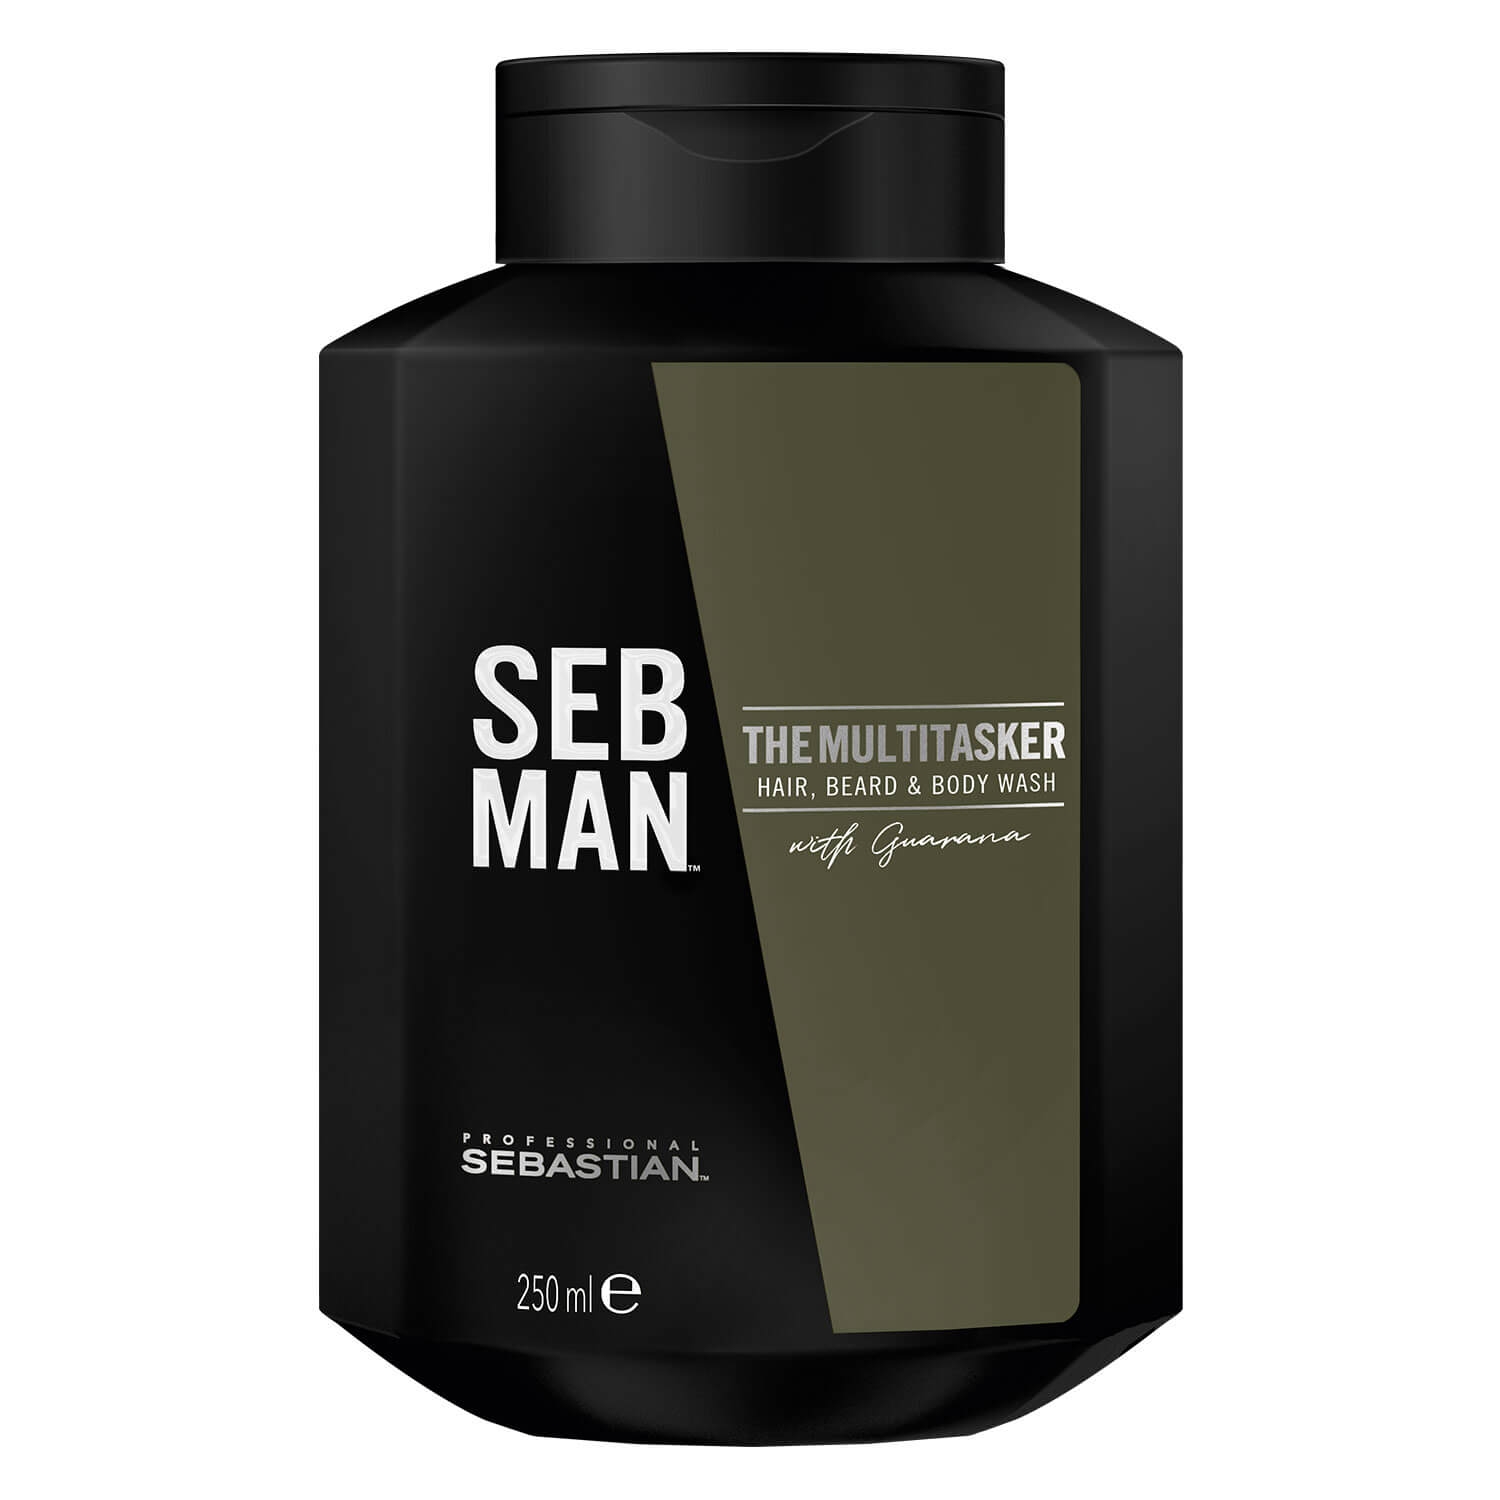 Produktbild von SEB MAN - The Multitasker Hair Beard & Body Wash